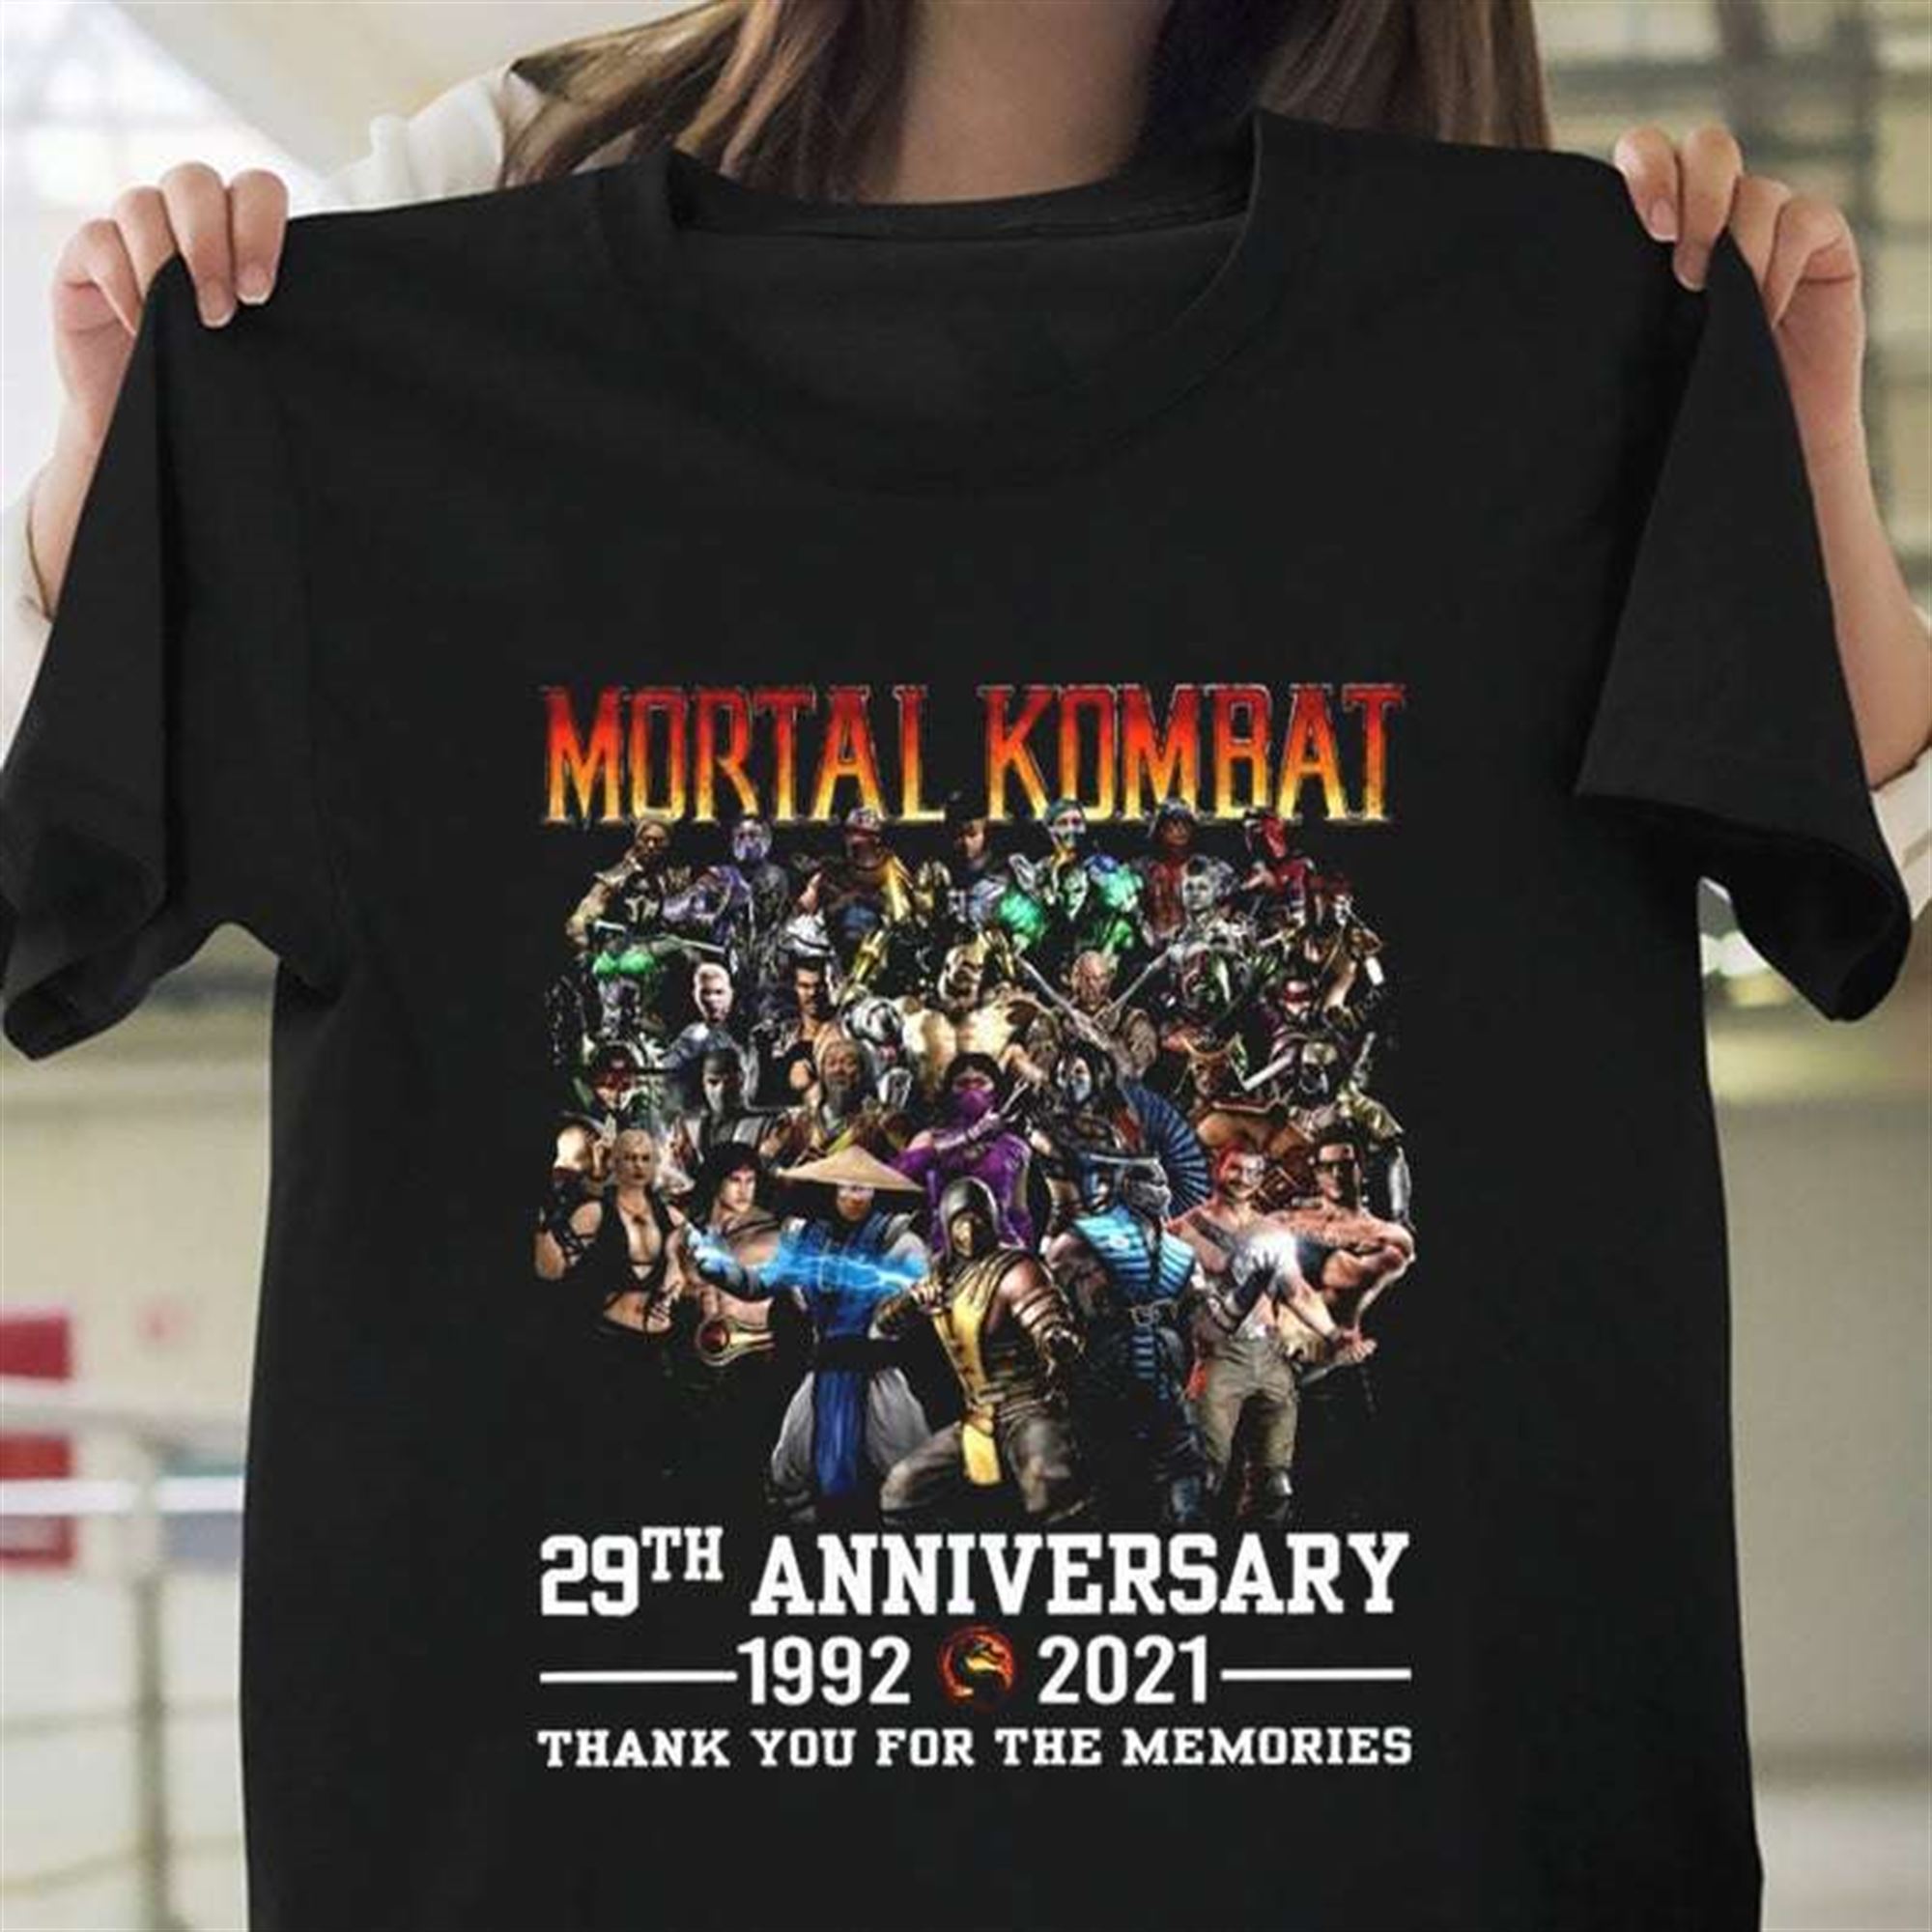 Mortal Kombat 29th Anniversary 1992-2021 T-shirt Size Up To 5xl